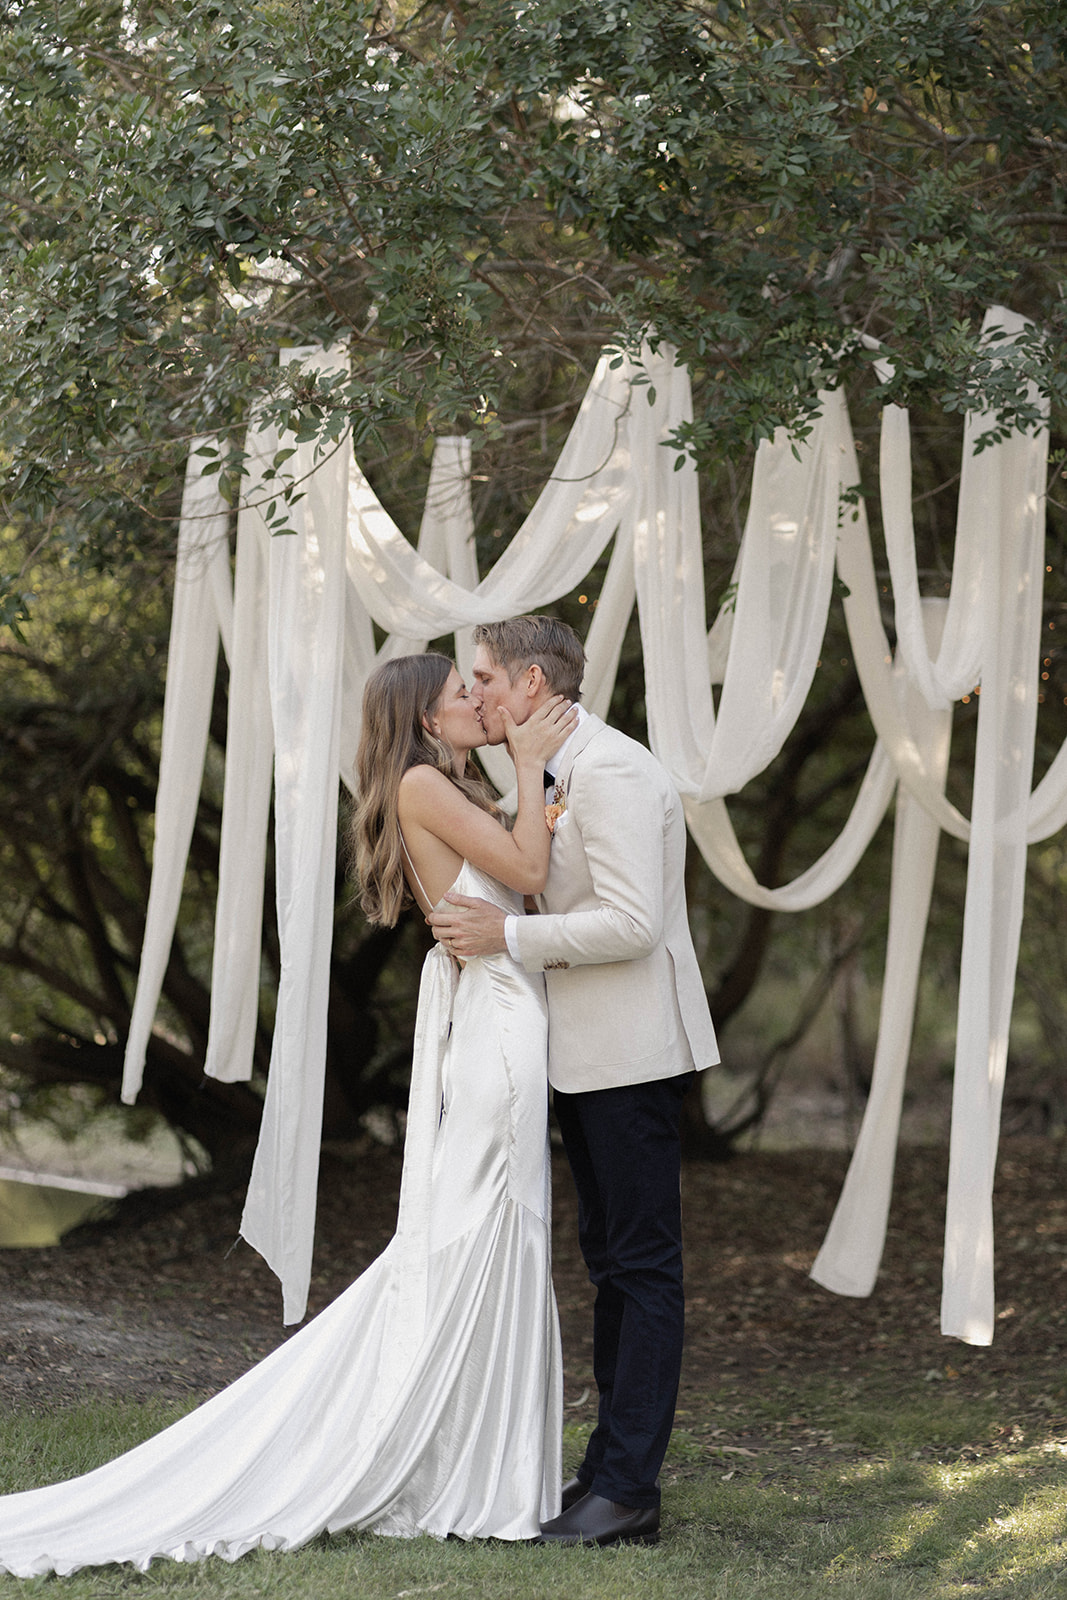 Brisbane editorial backyard wedding photography, candids of Ceremony